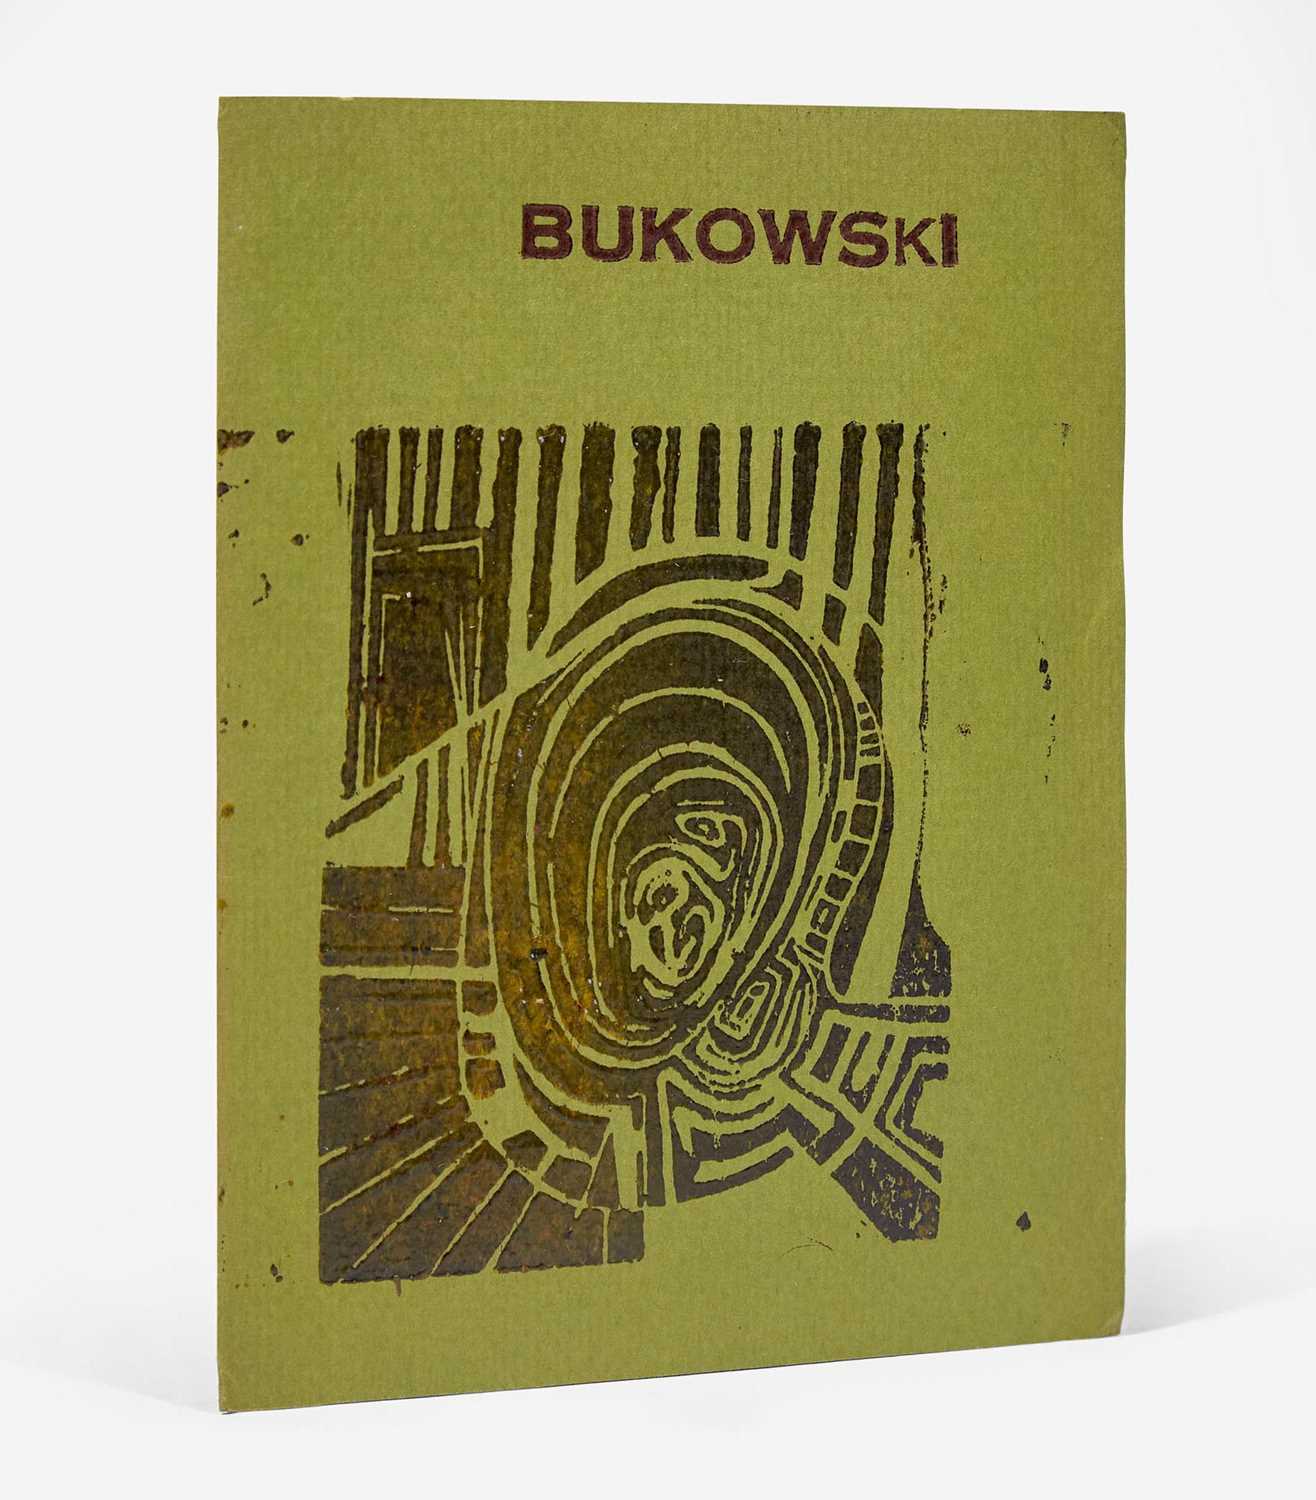 Lot 53 - [Counter-Culture] Bukowski, Charles